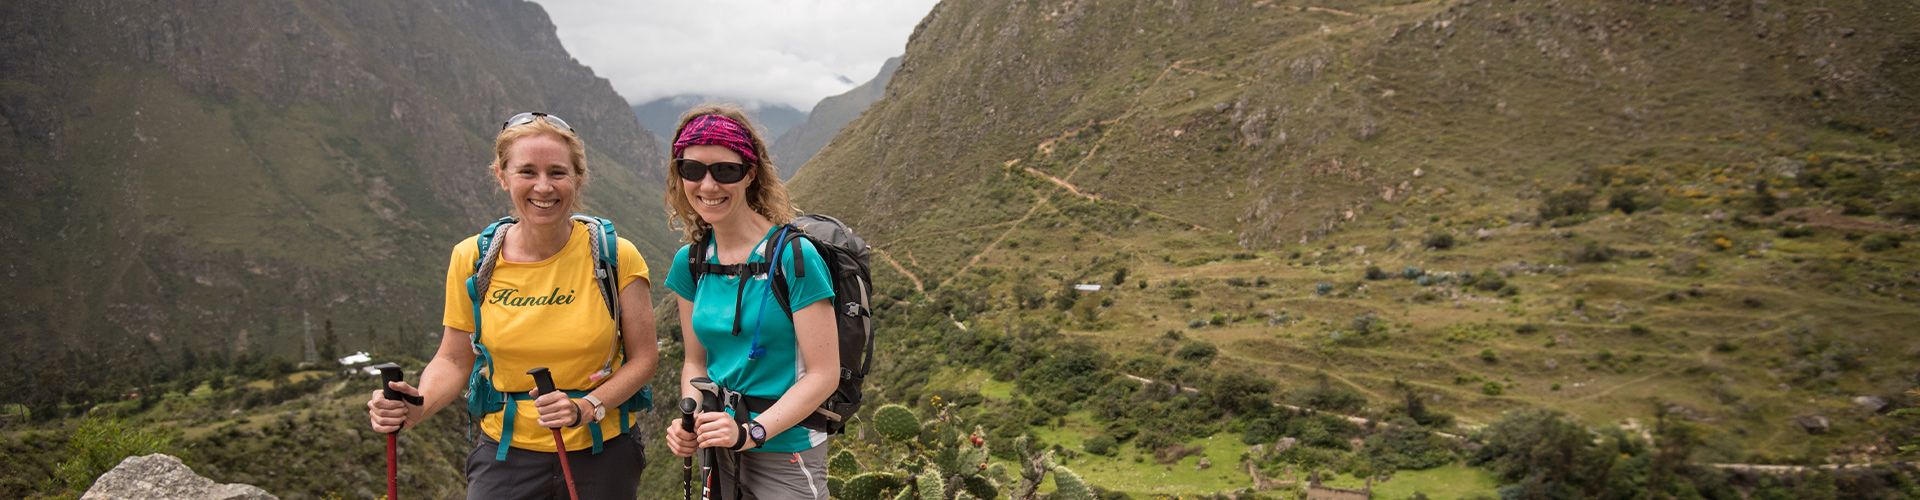 Peru: Women's Expedition